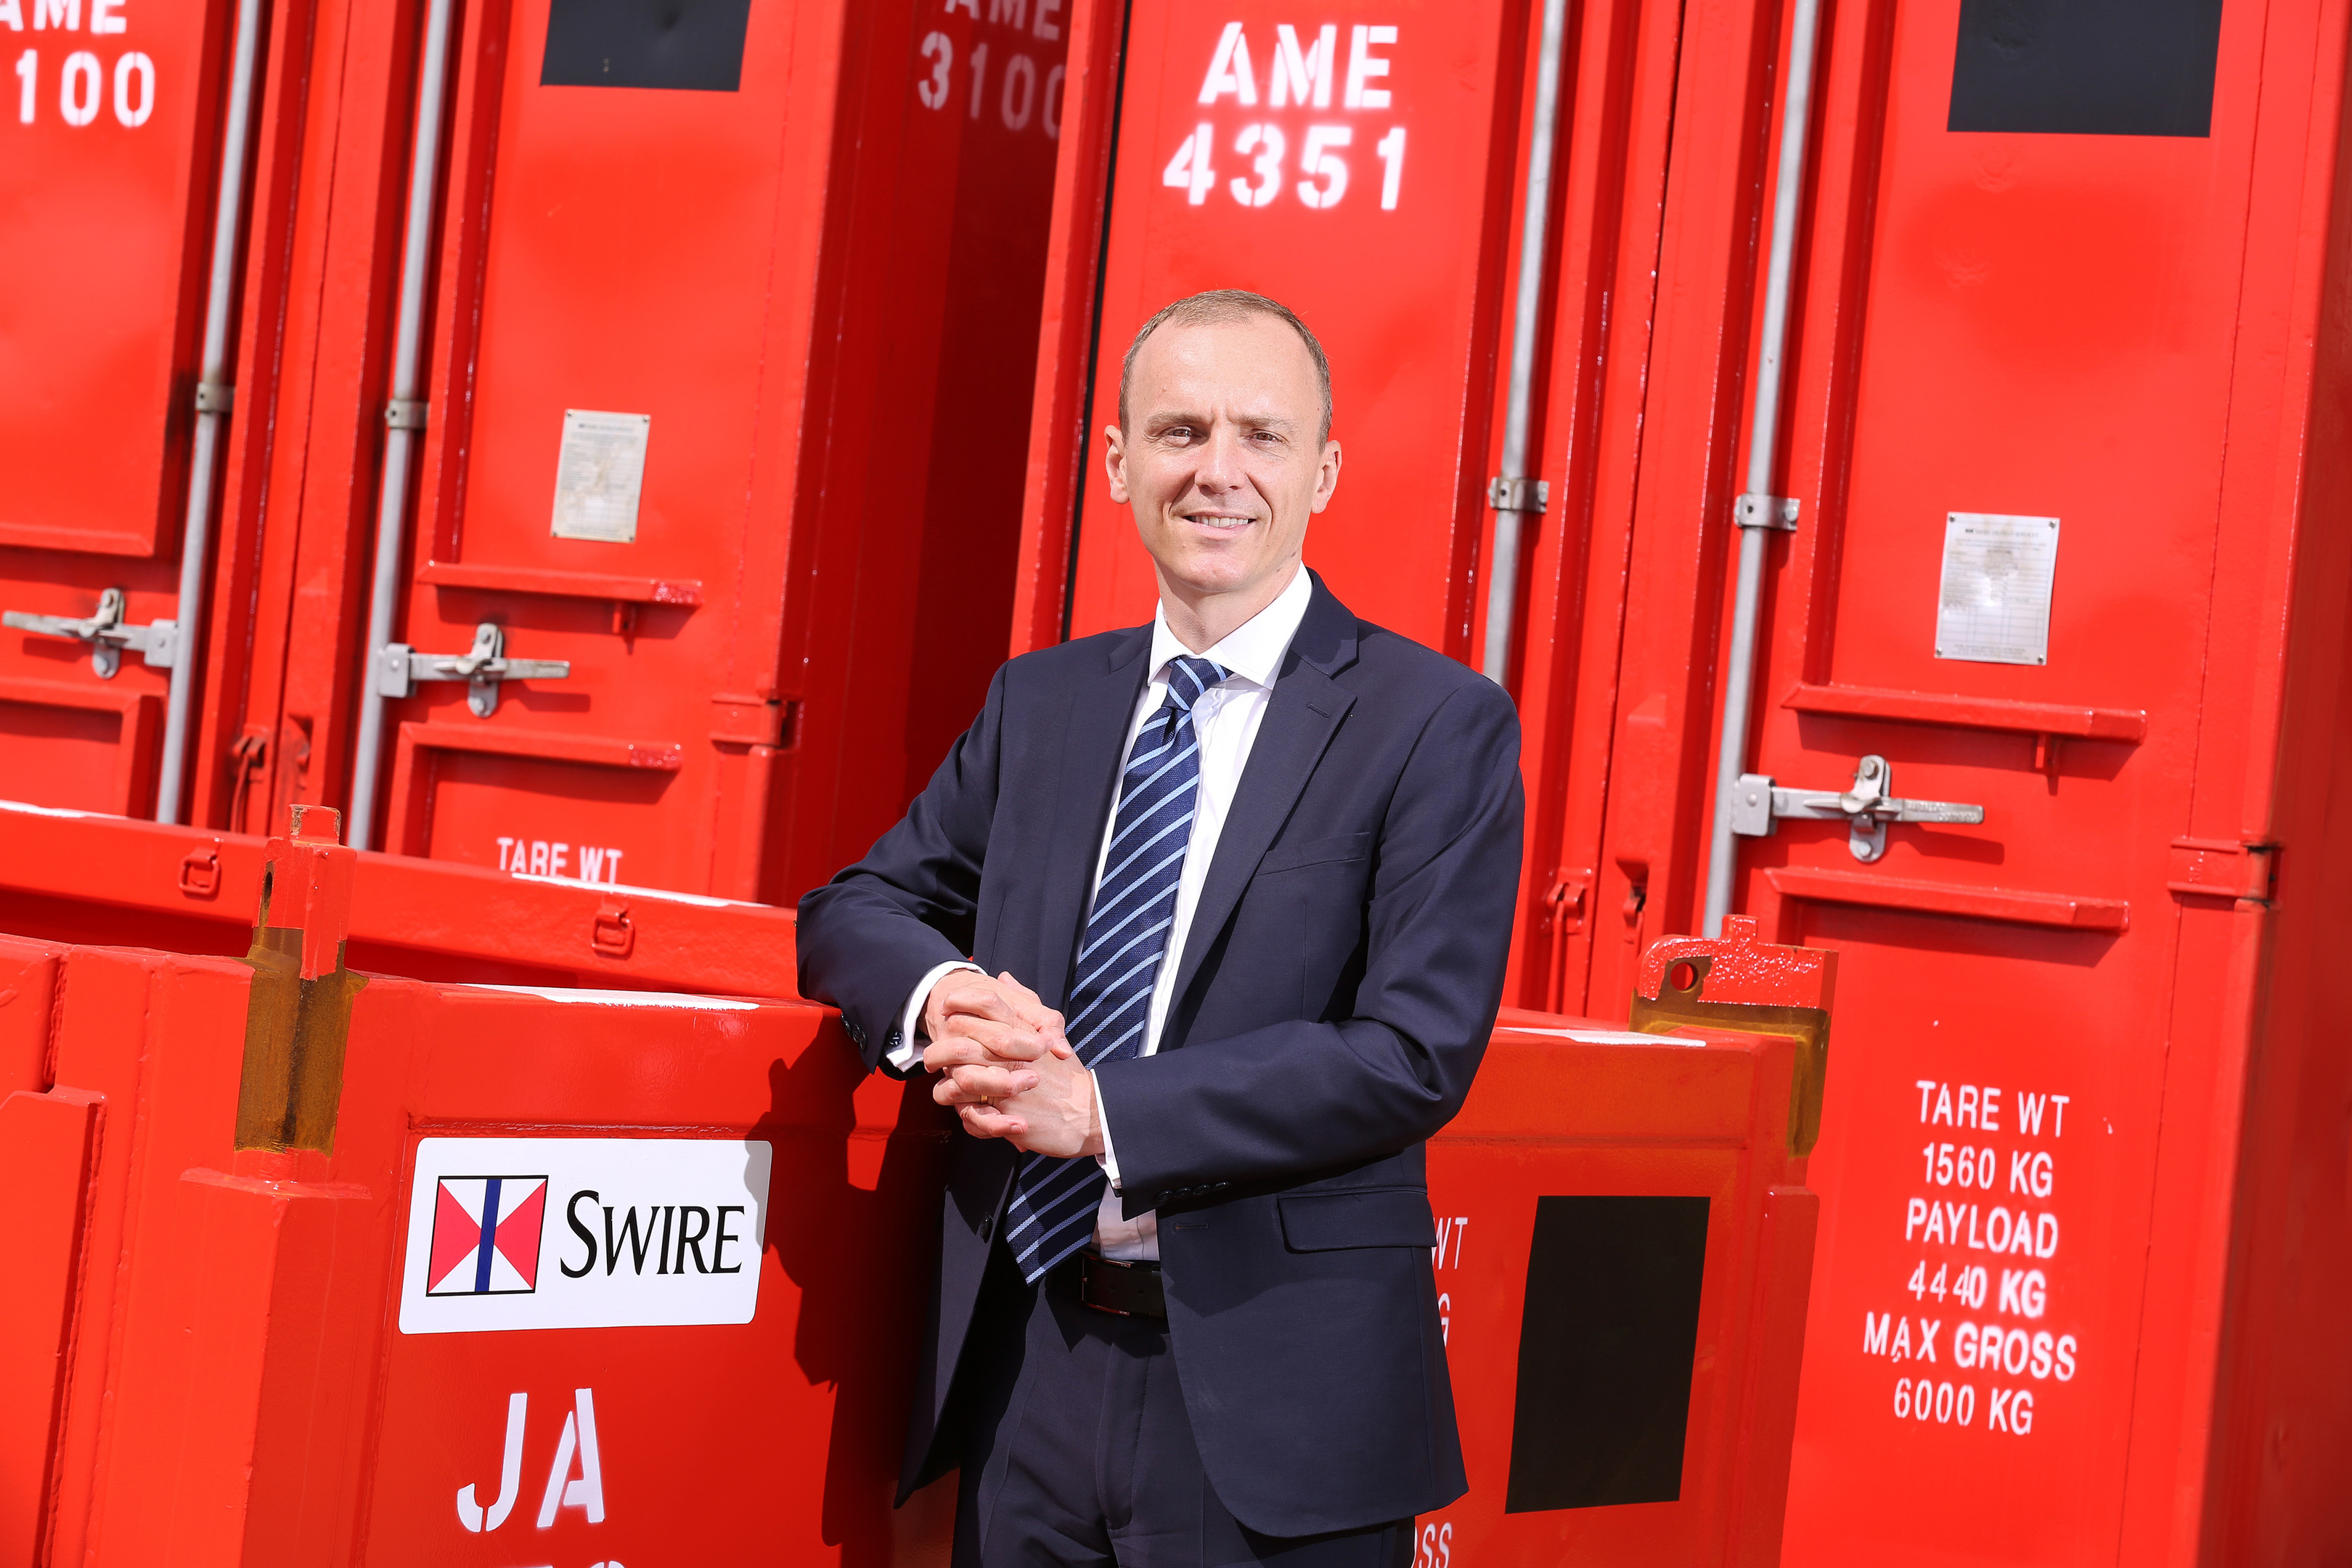 Swire's new CFO Martin Shaw